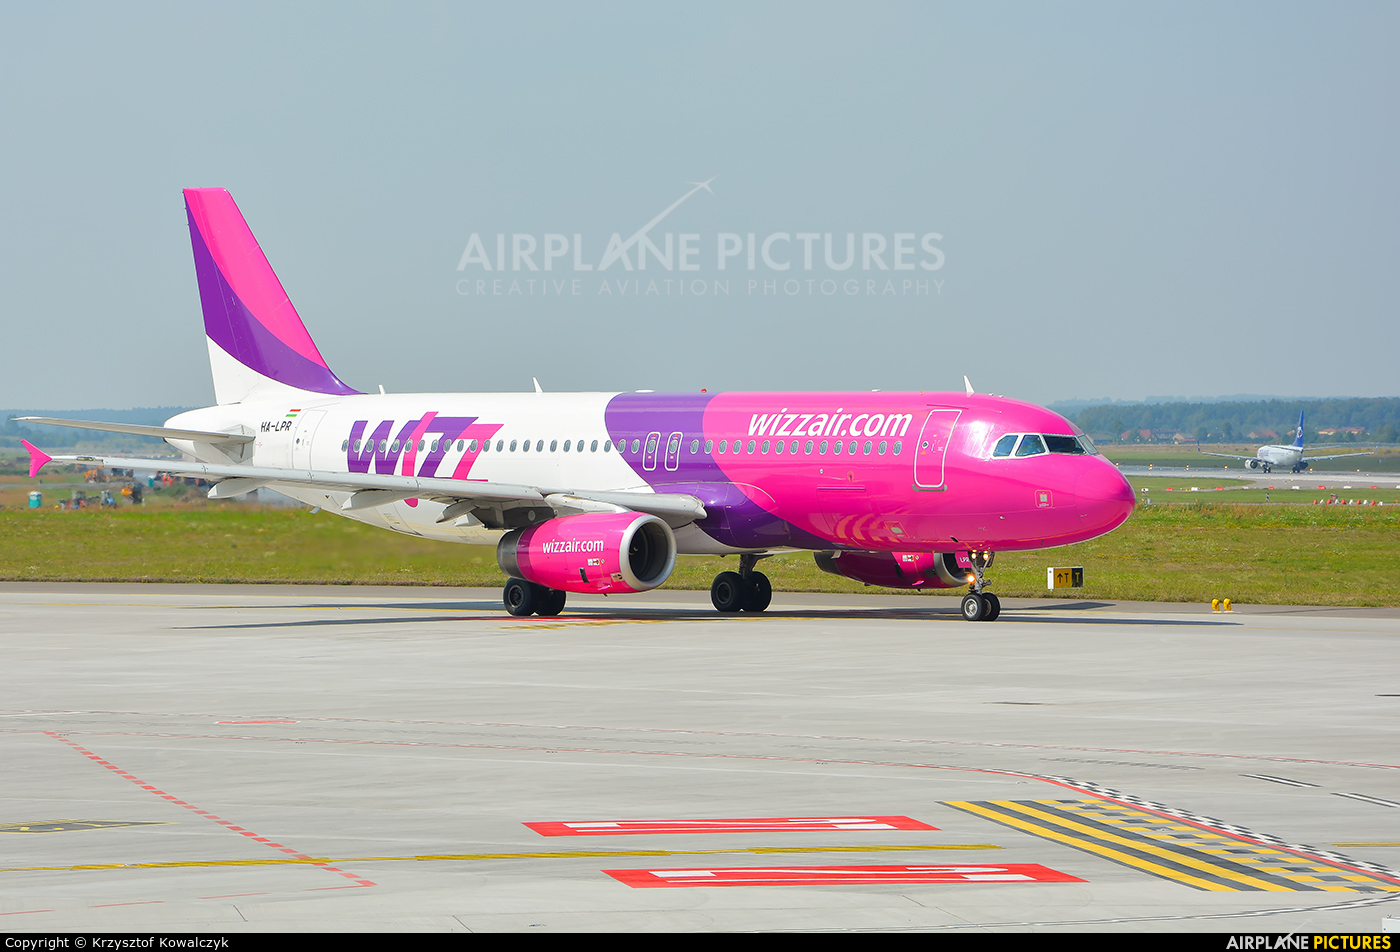 Wizz Air HA-LPR aircraft at Katowice - Pyrzowice